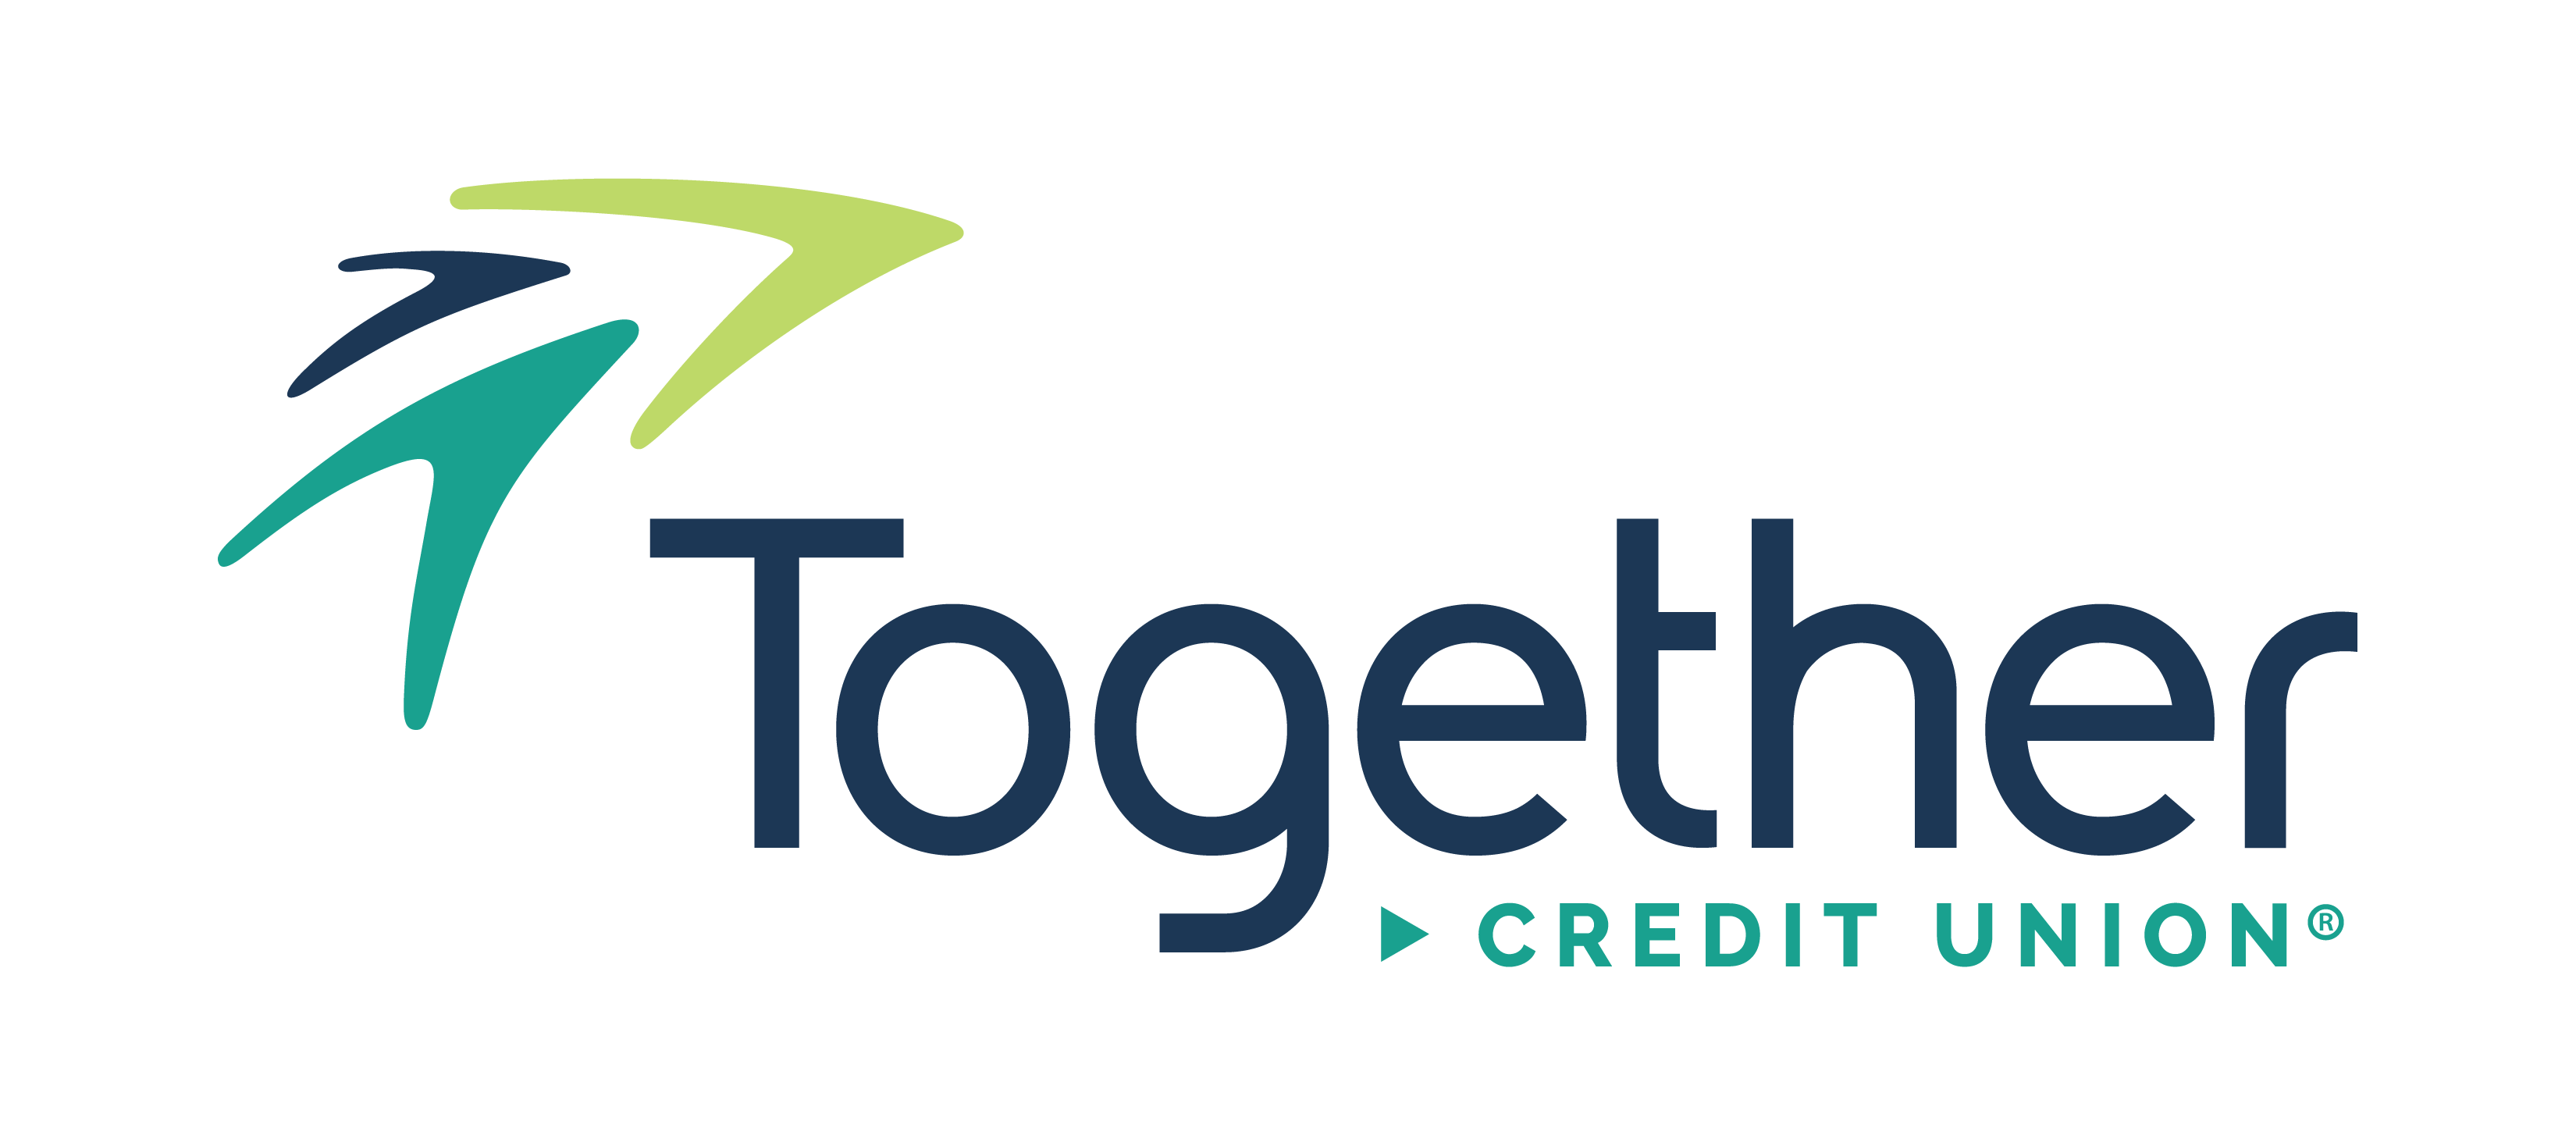 Together Credit Union logo